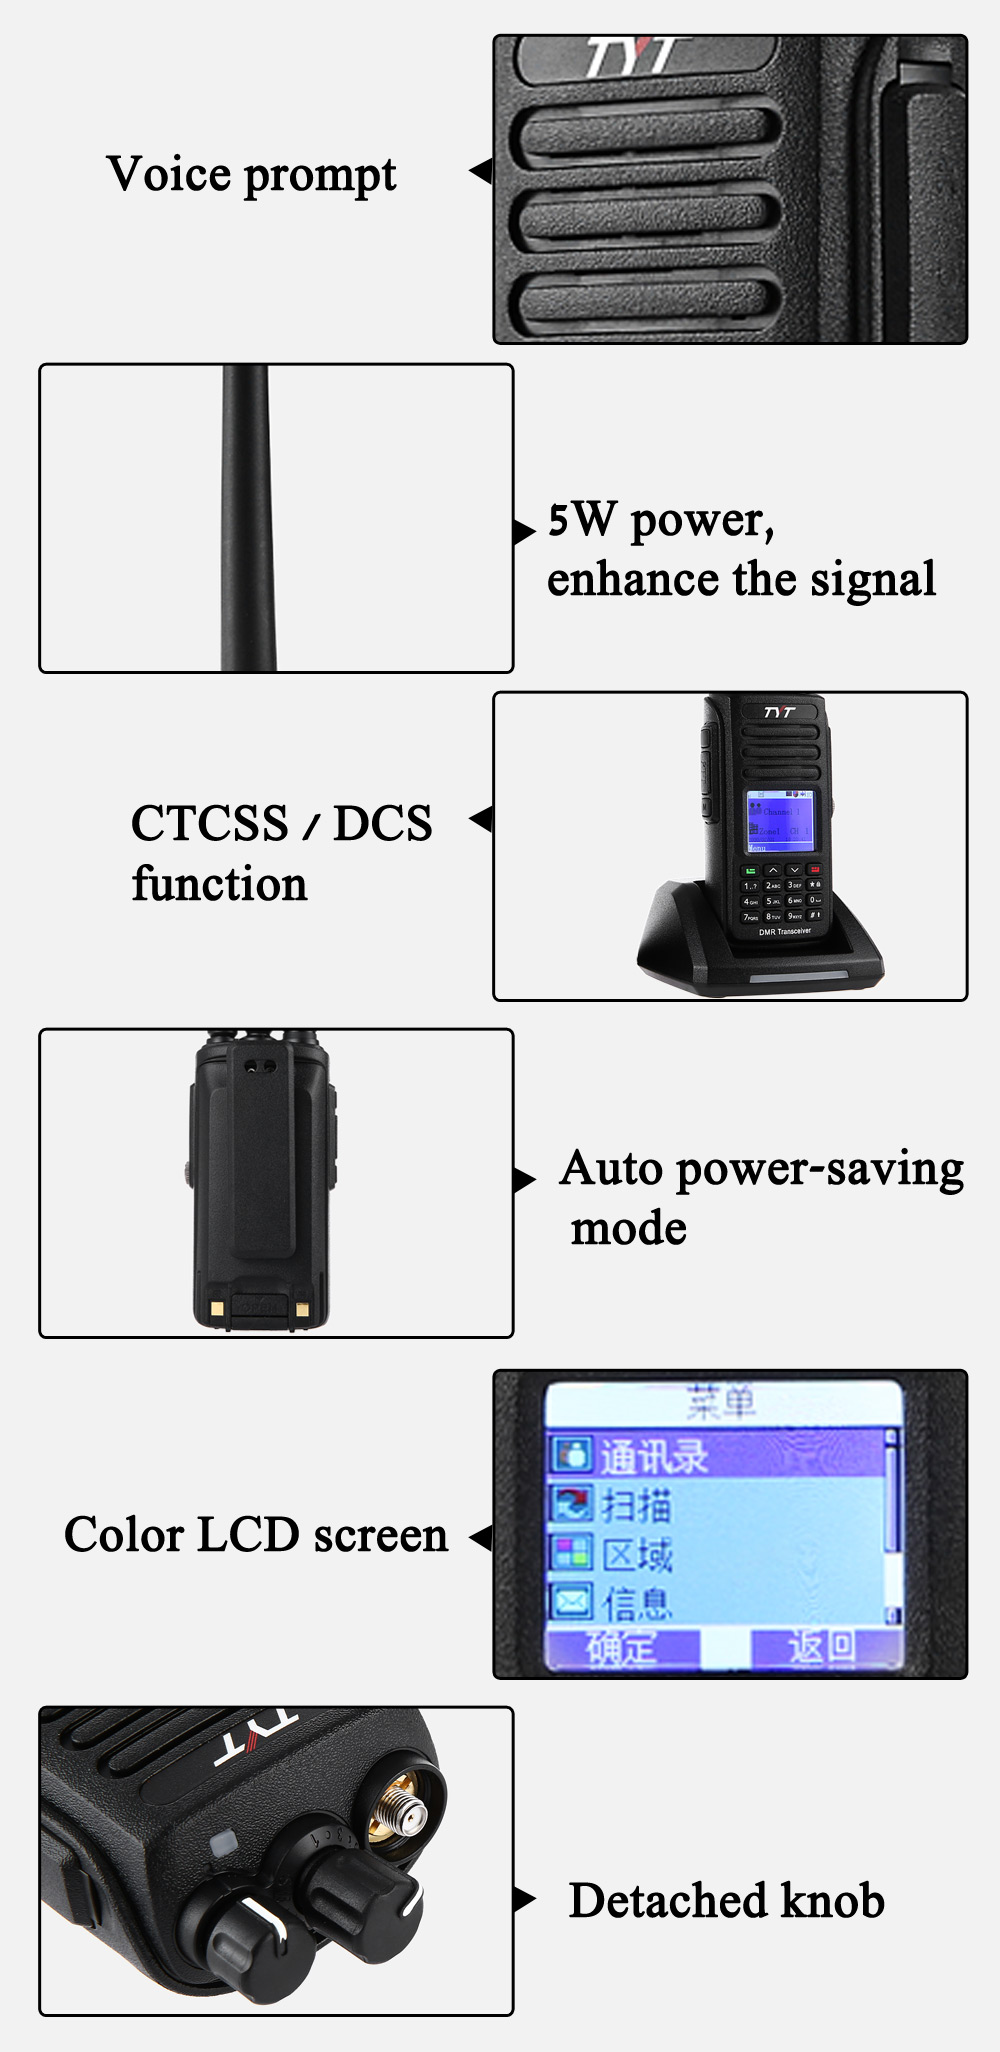 IP67 Waterproof Handheld Transceiver TYT MD-390 DMR Digital Walkie Talkie 1000 Channels UHF400-480MHz